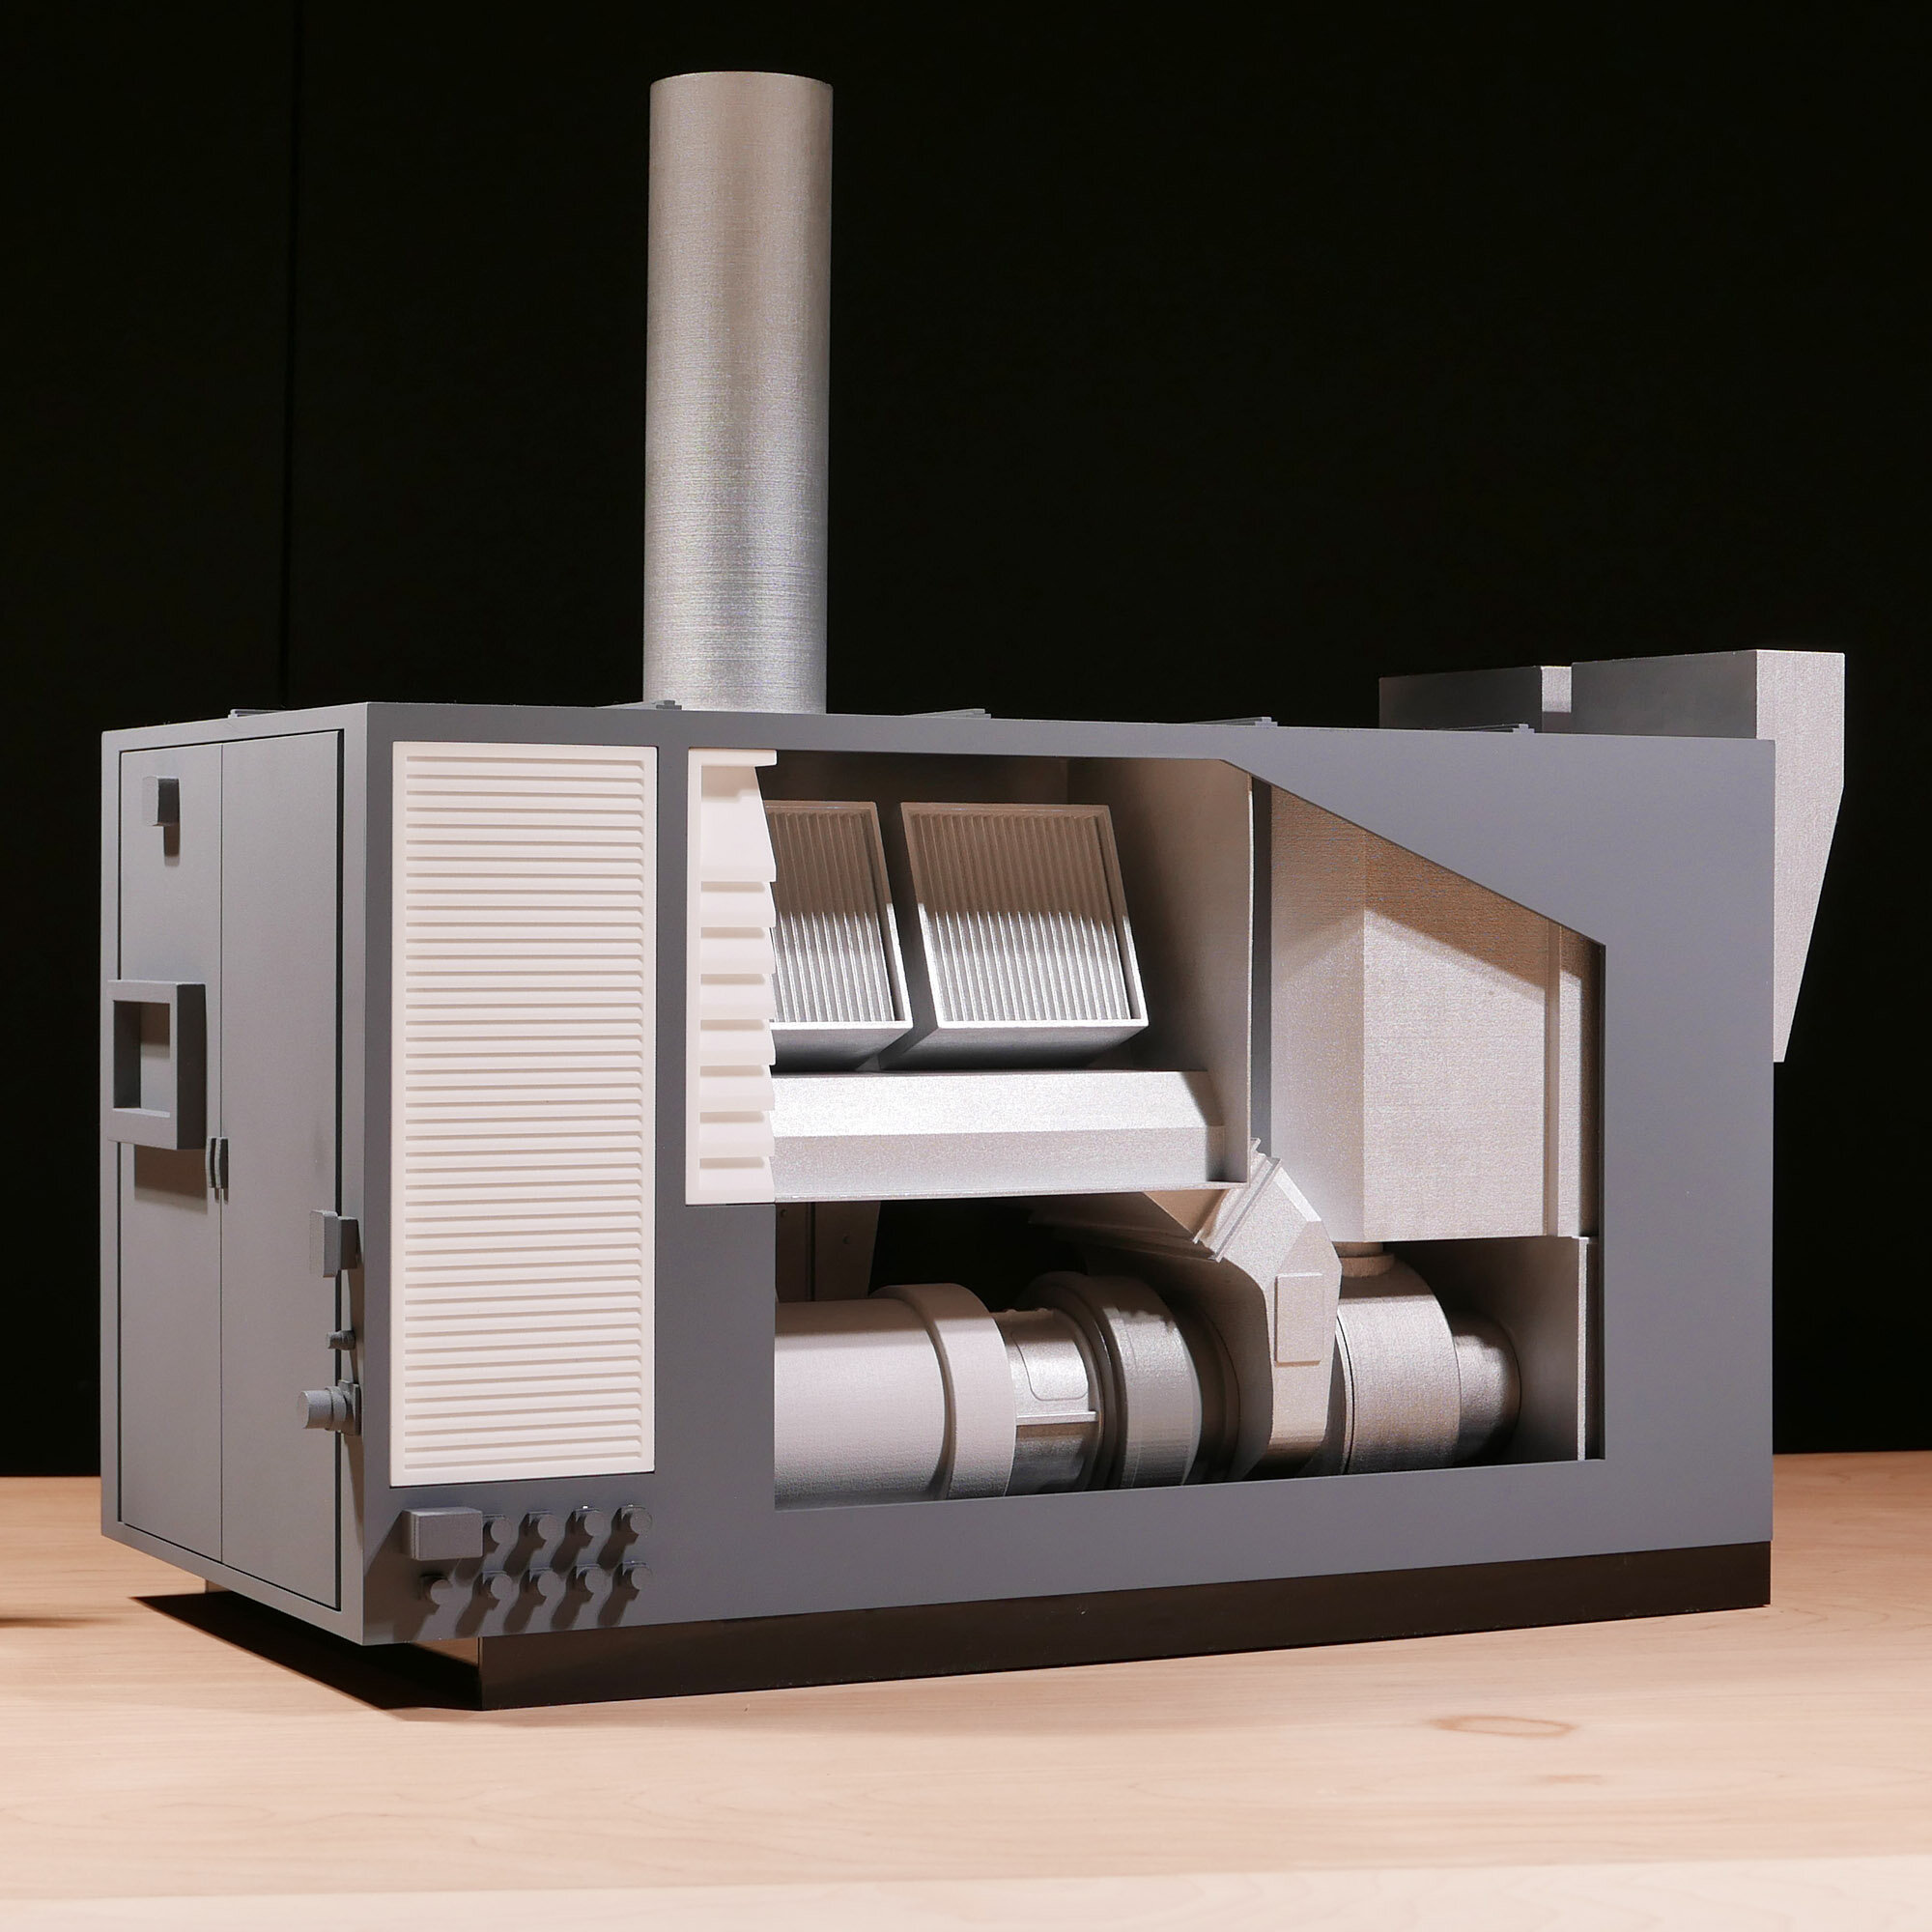 energy-turbine-3d-print-model.jpg